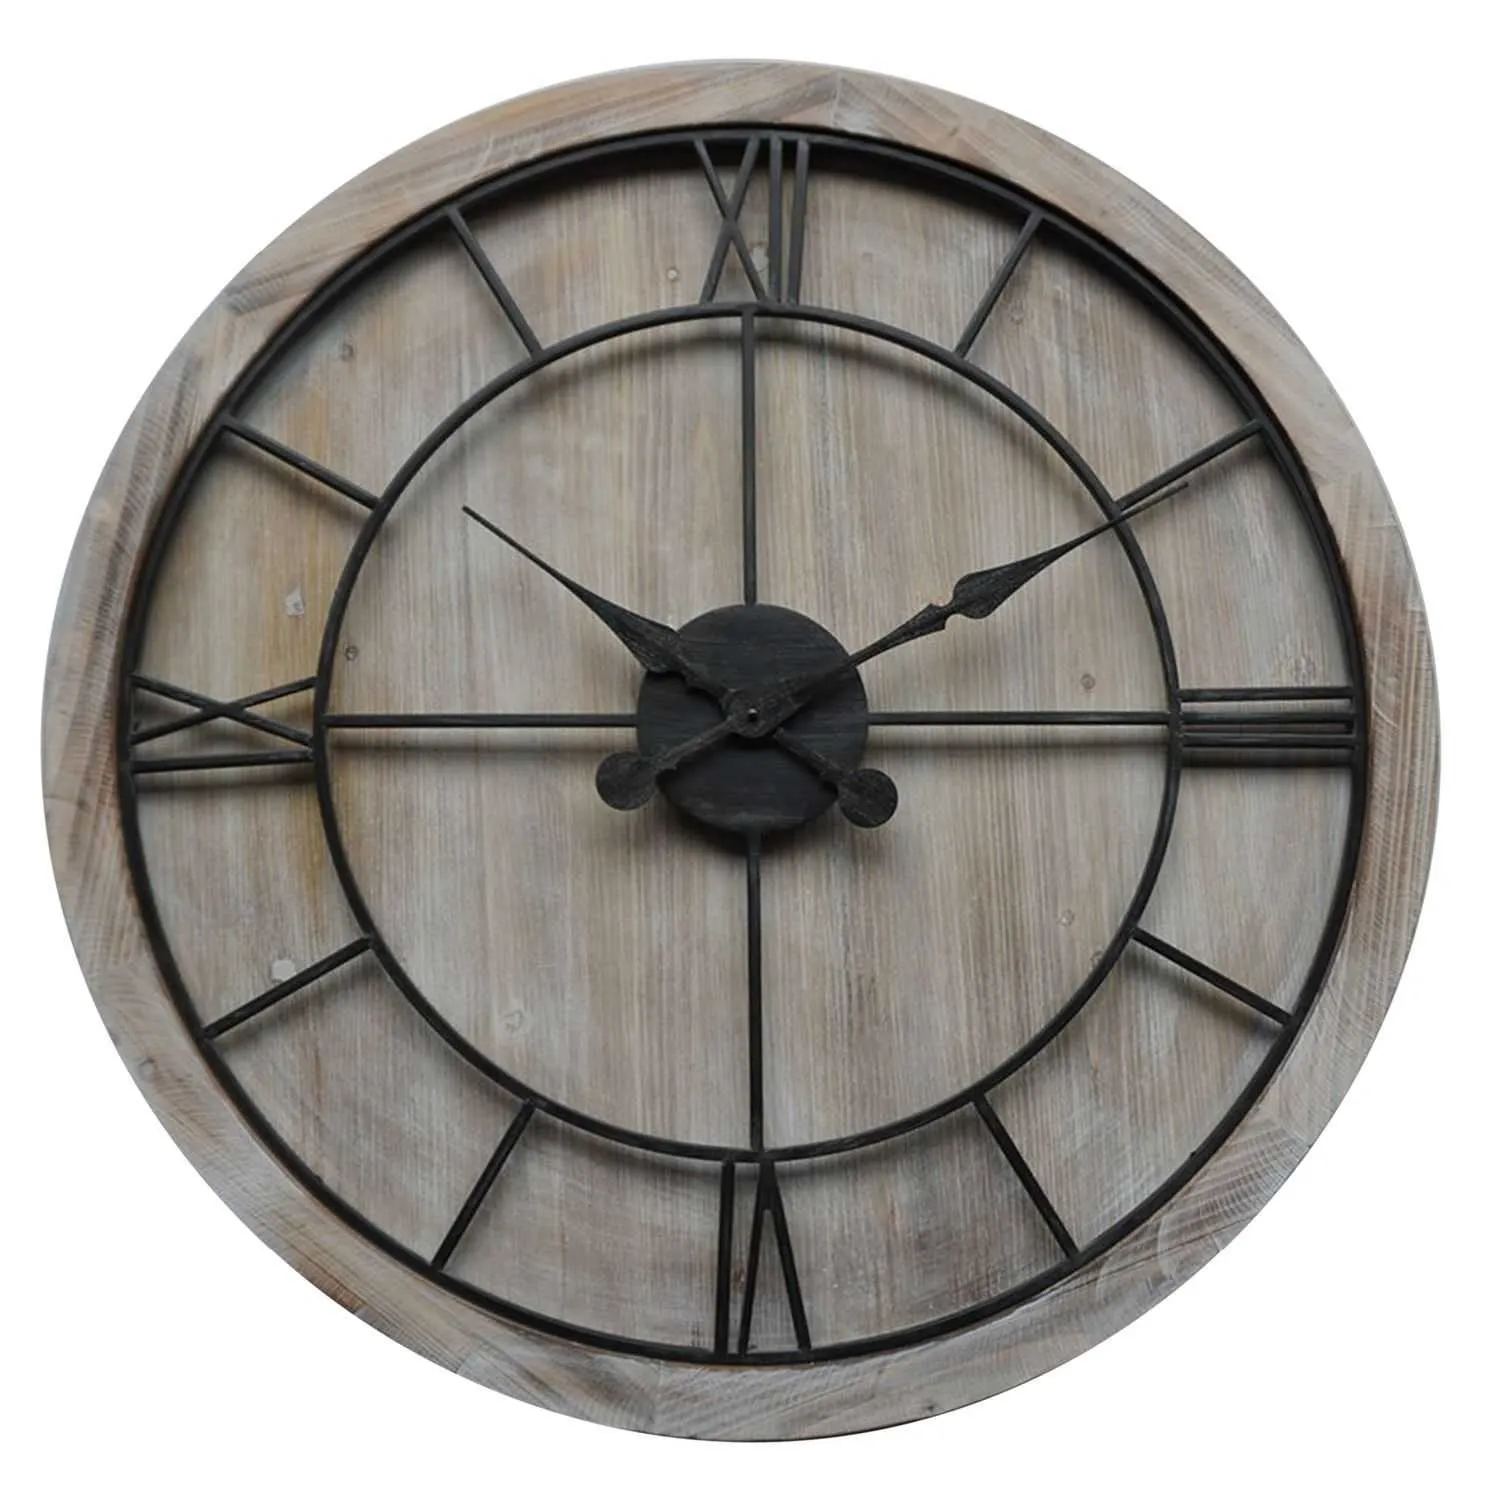 Williston Large Wooden Round Wall Clock Grey Metal Roman Numeral Clock Face 90cm Dia